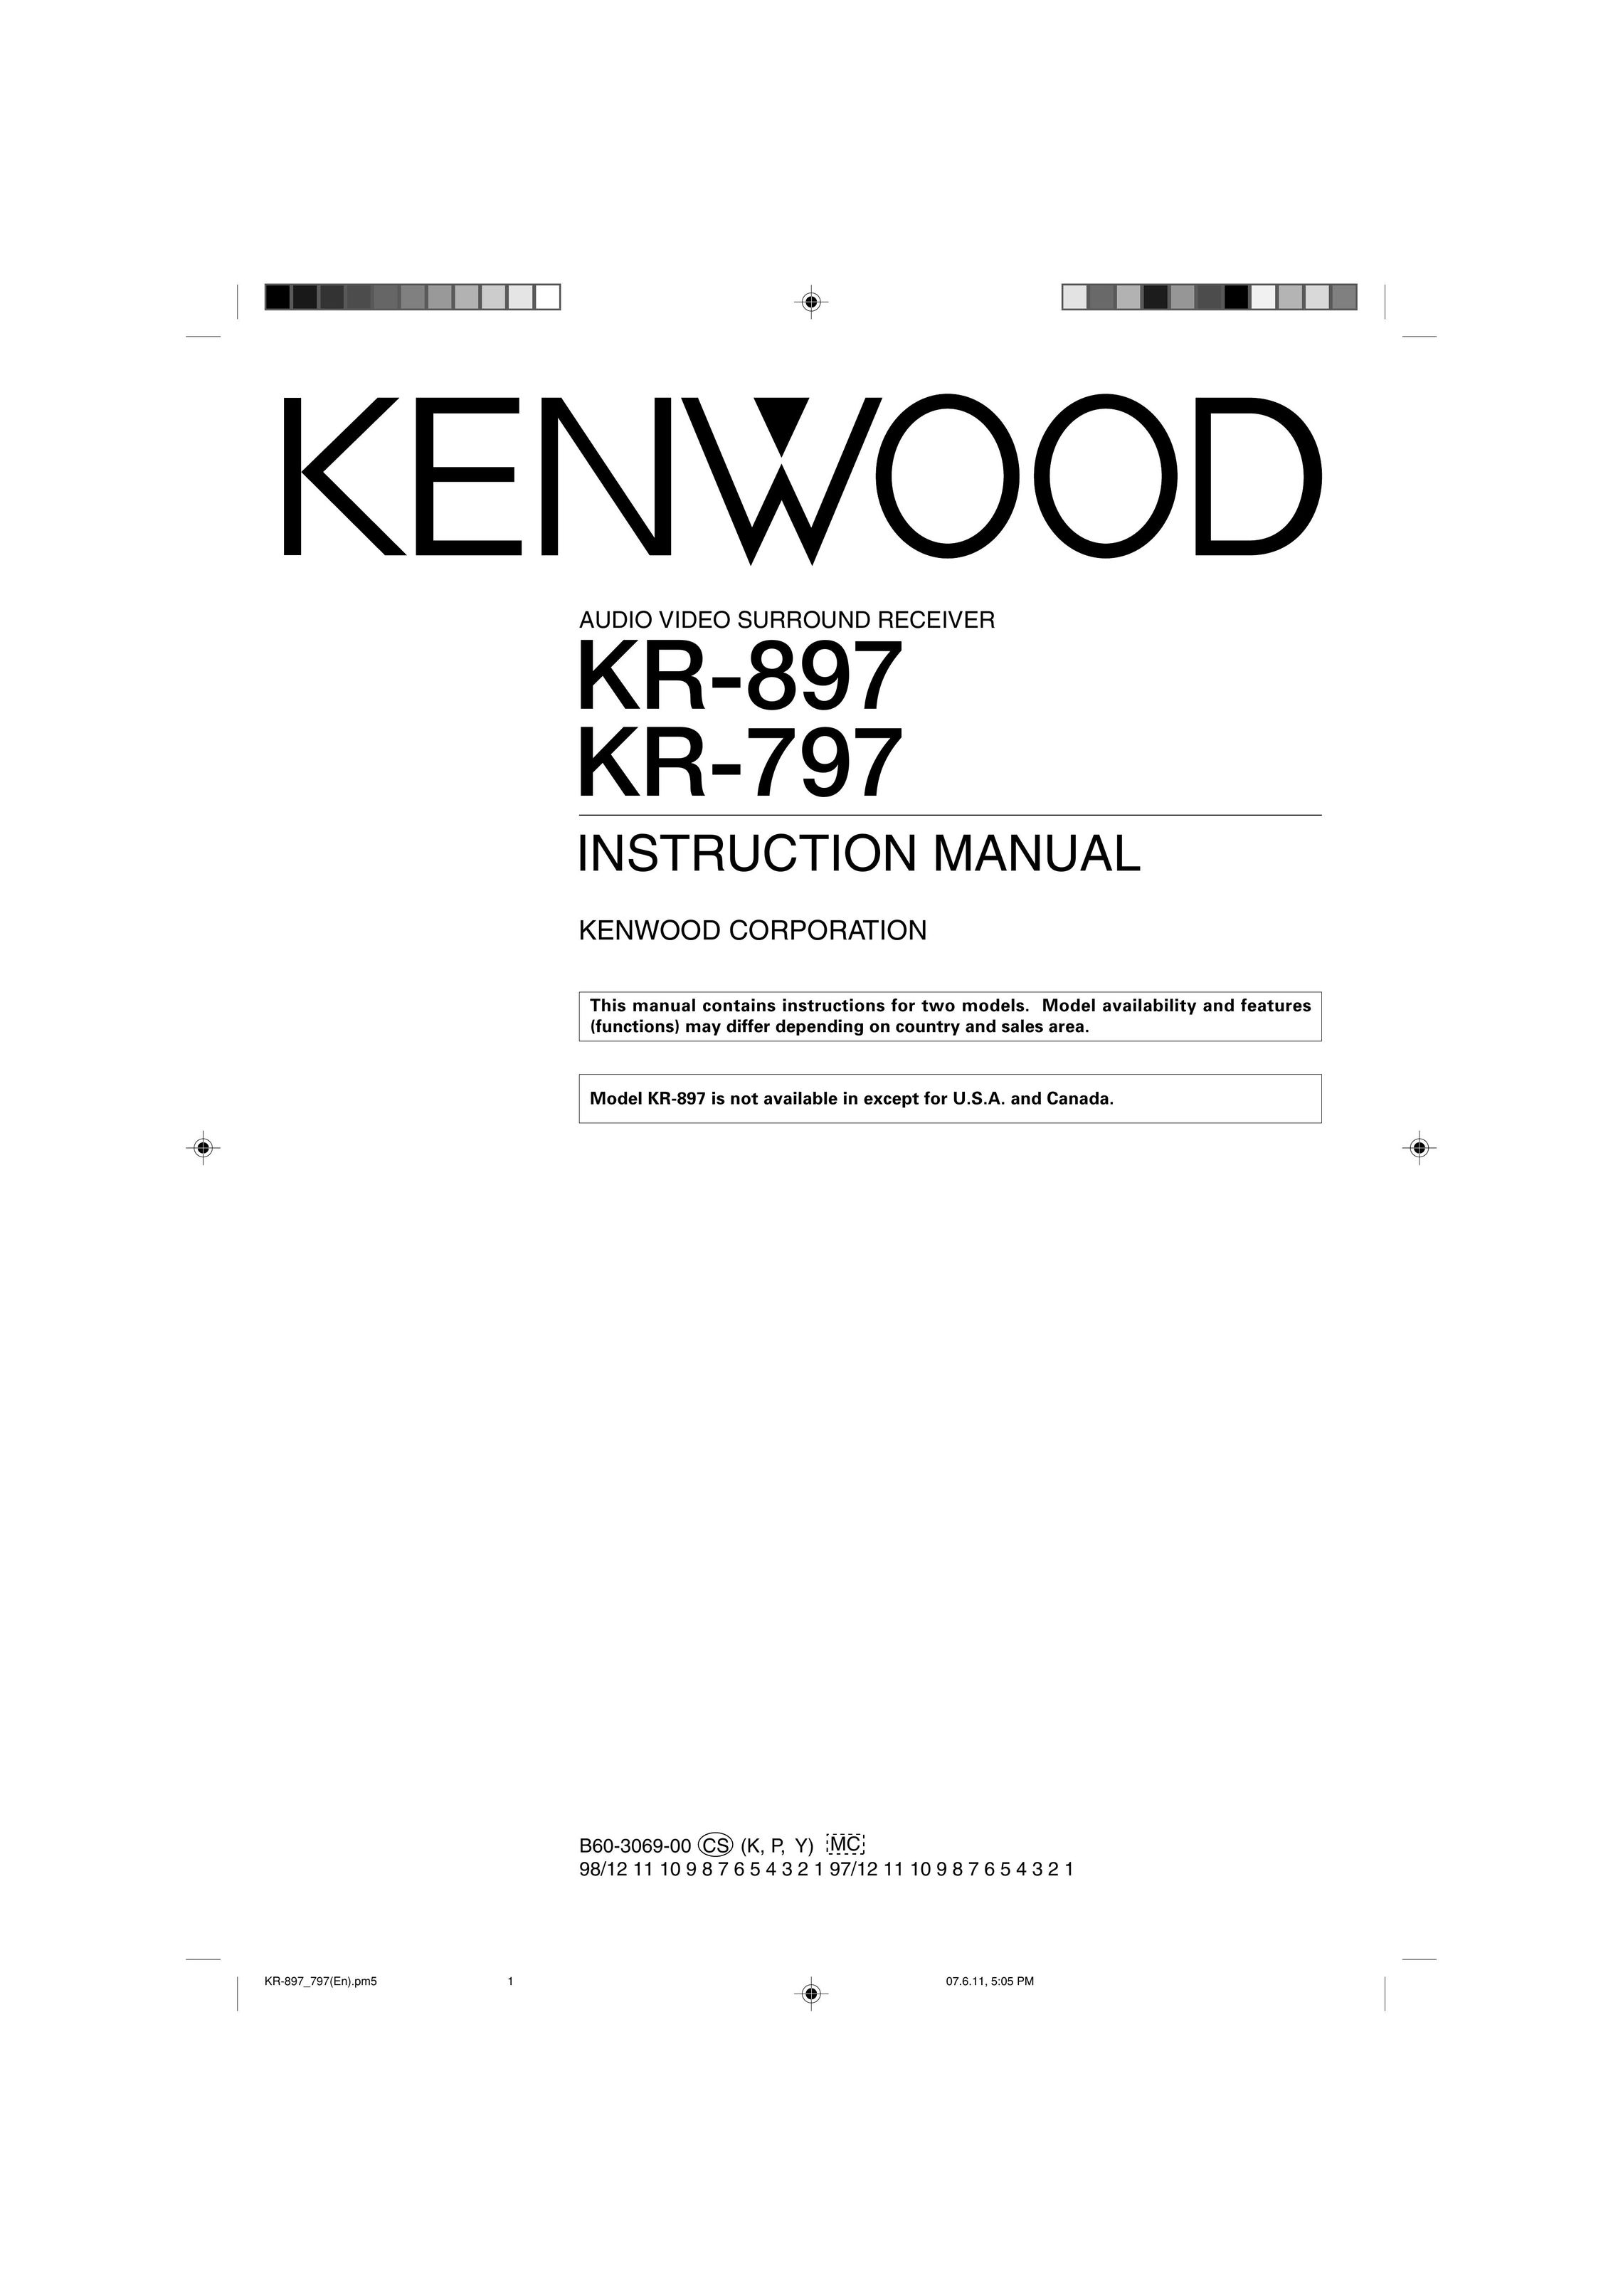 Kenwood KR-797 Stereo Receiver User Manual